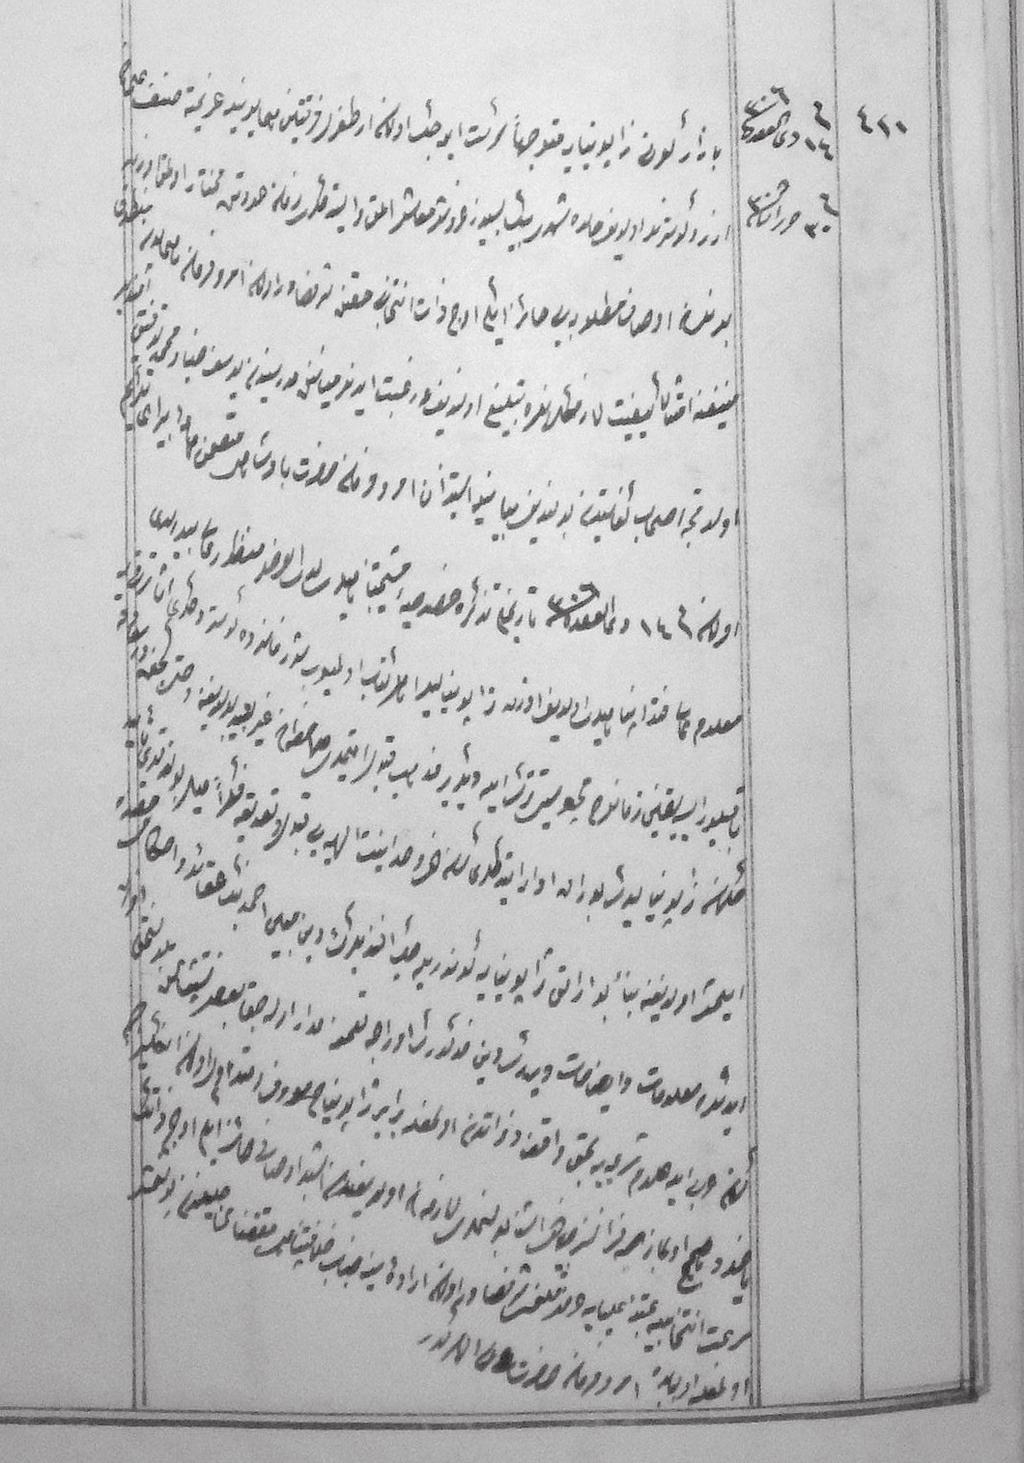 Resim 1: Abdülhamid in ikinci iradesi [İMMA, Maruzat Defteri, no. 2, s.